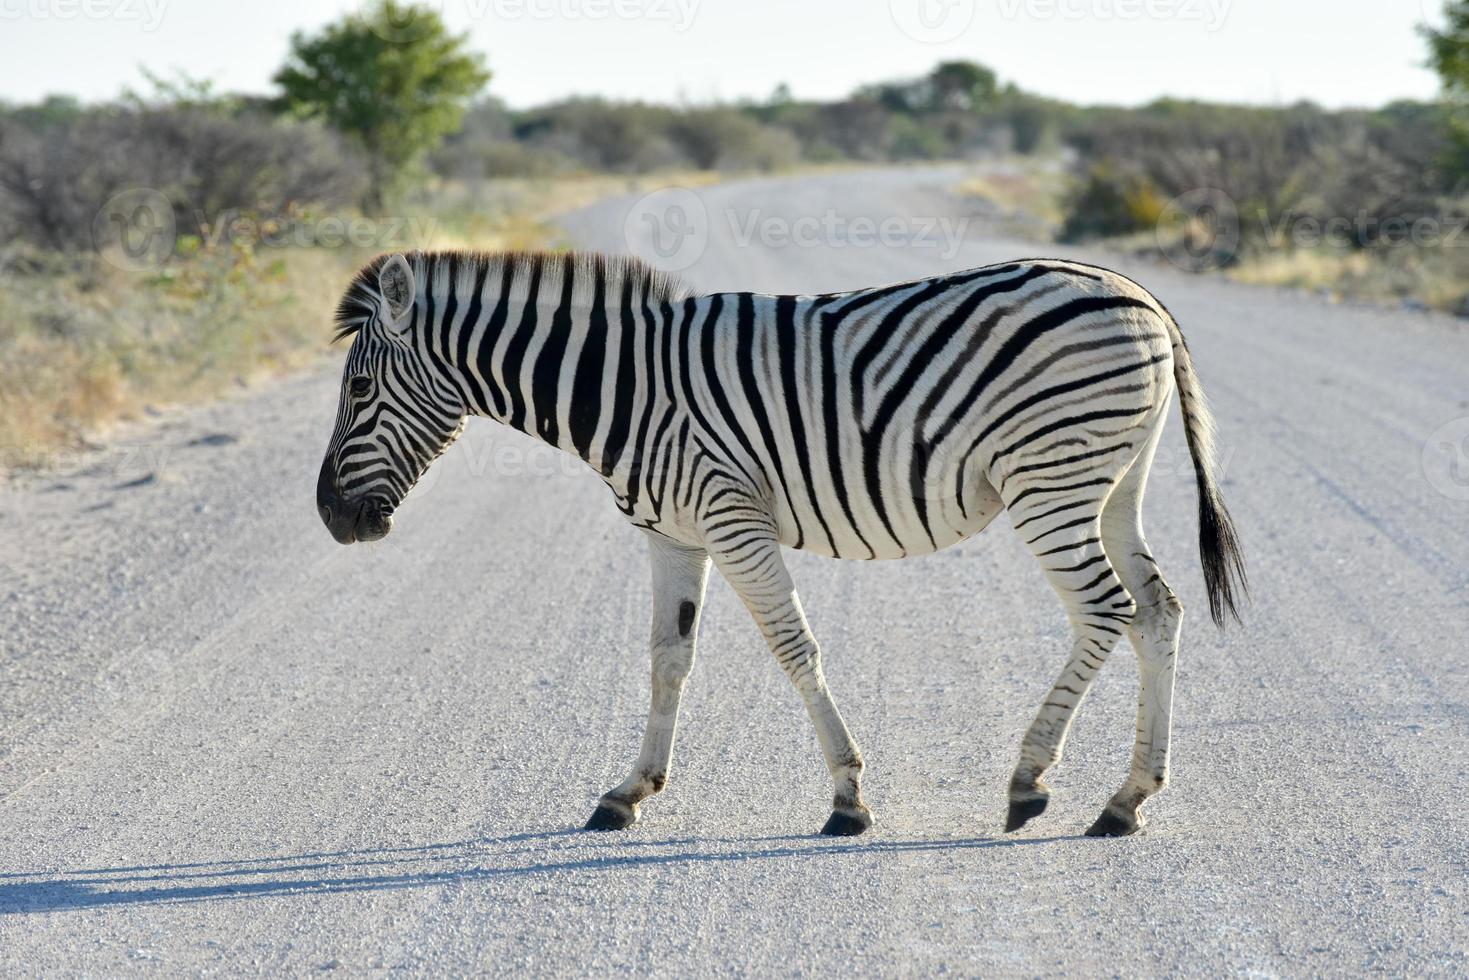 zebra - etosha, namibia foto